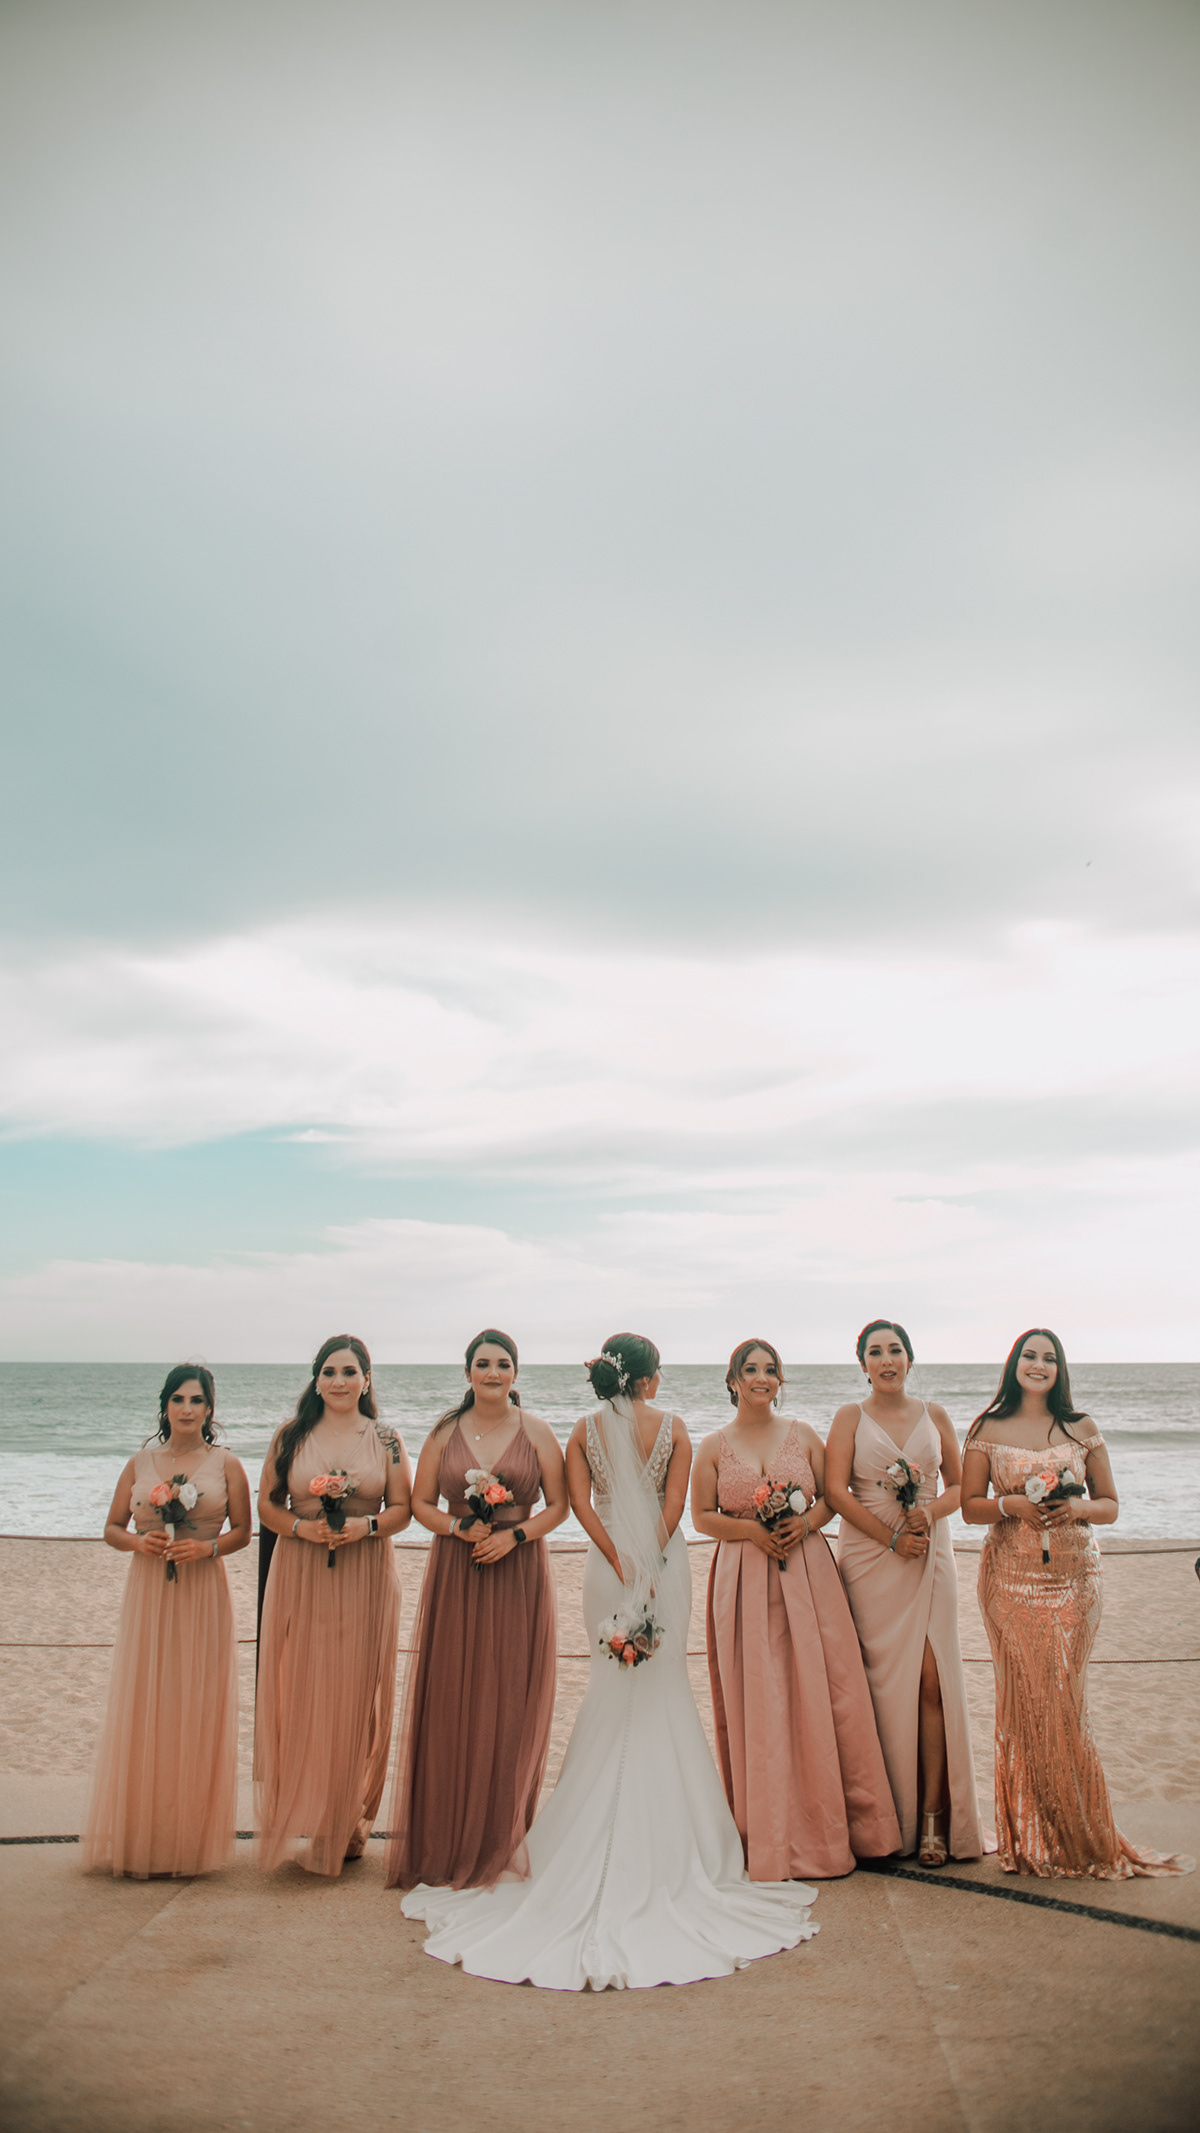 Boda Fotografia mazatlan mexico photoshoot playa save the date wedding